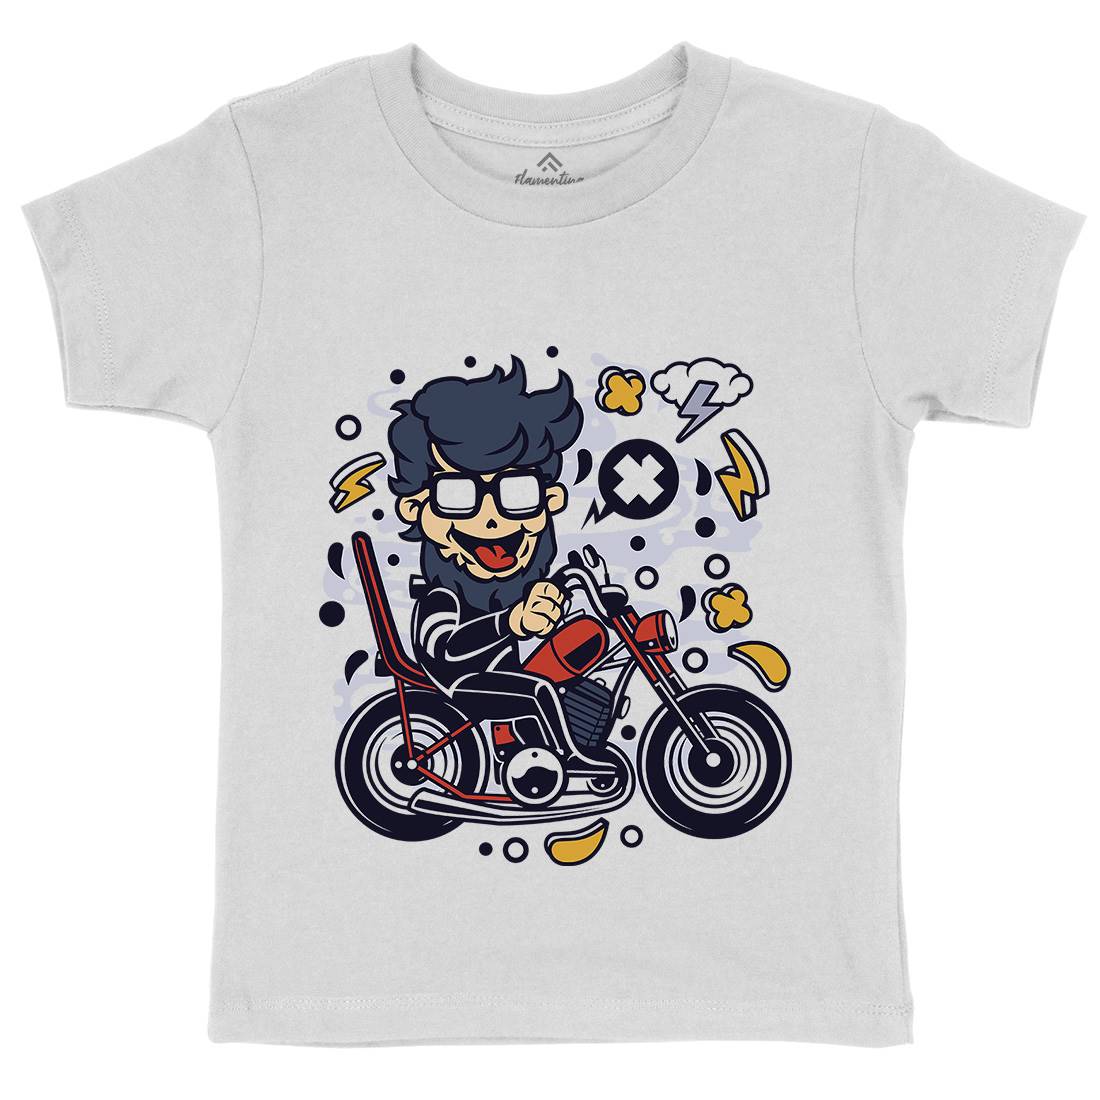 Chopper Hipster Kids Crew Neck T-Shirt Motorcycles C517